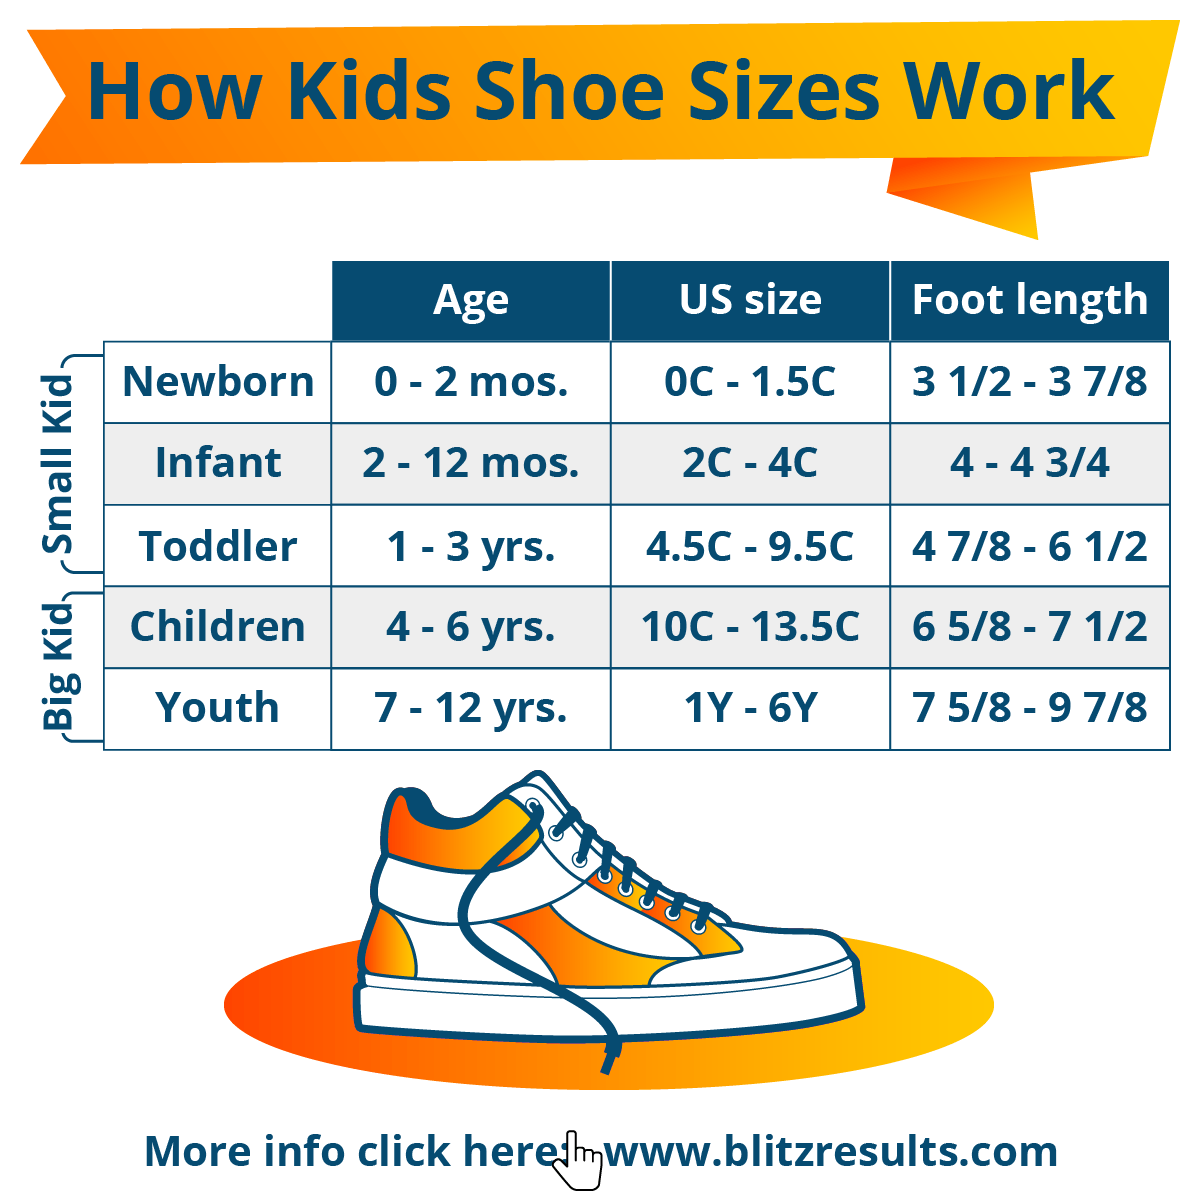 How do Kids Shoe Sizes work?